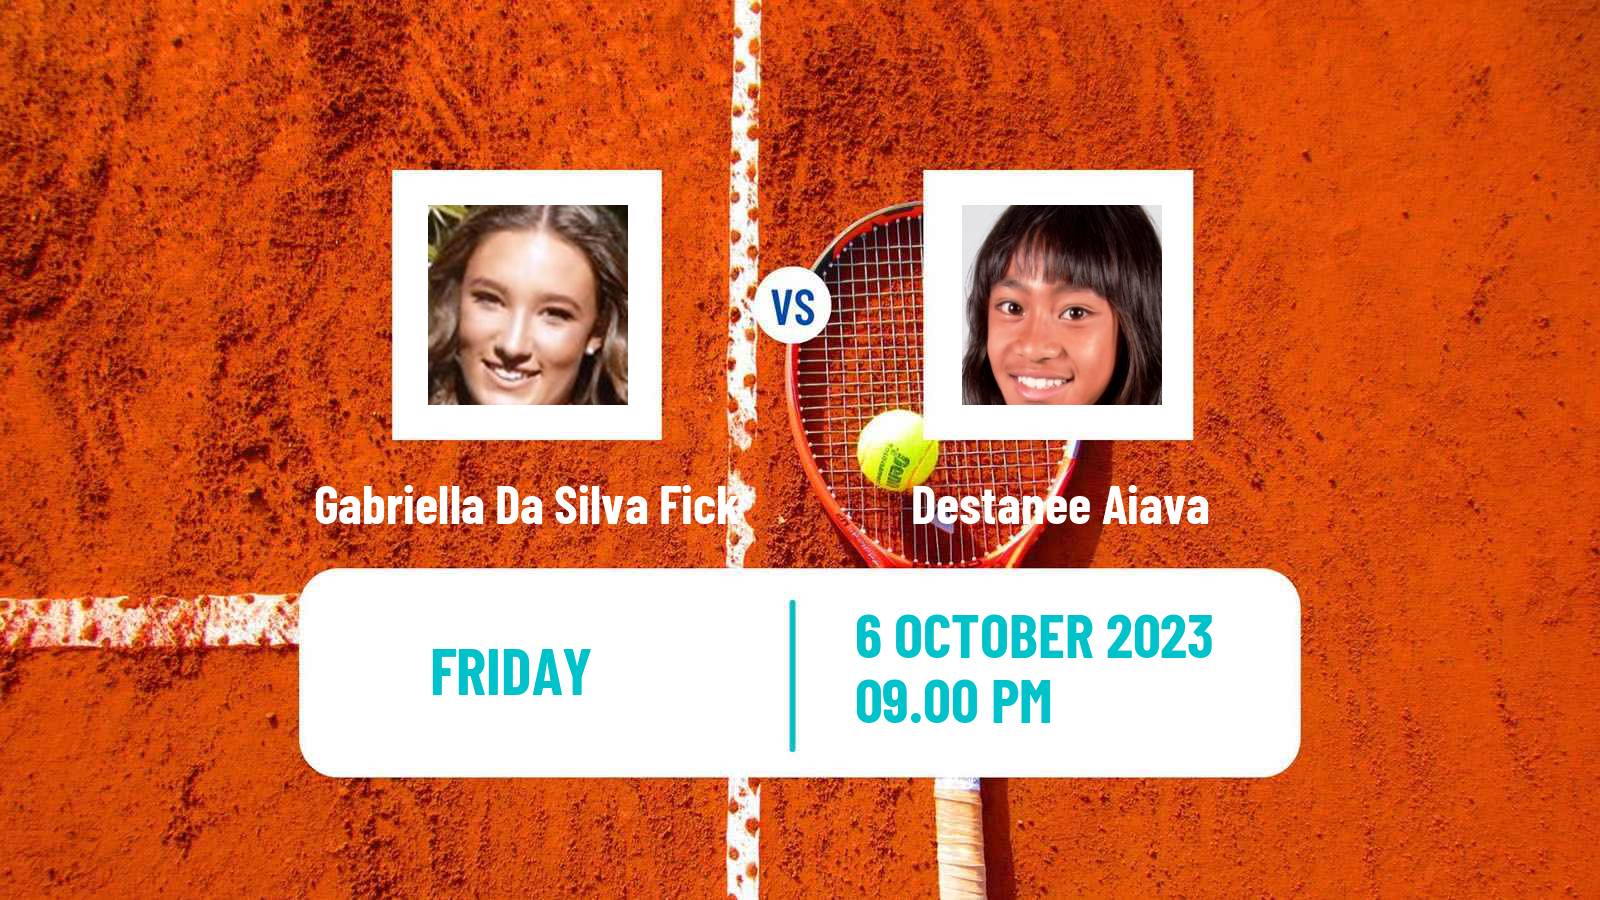 Tennis ITF W25 Cairns Women Gabriella Da Silva Fick - Destanee Aiava